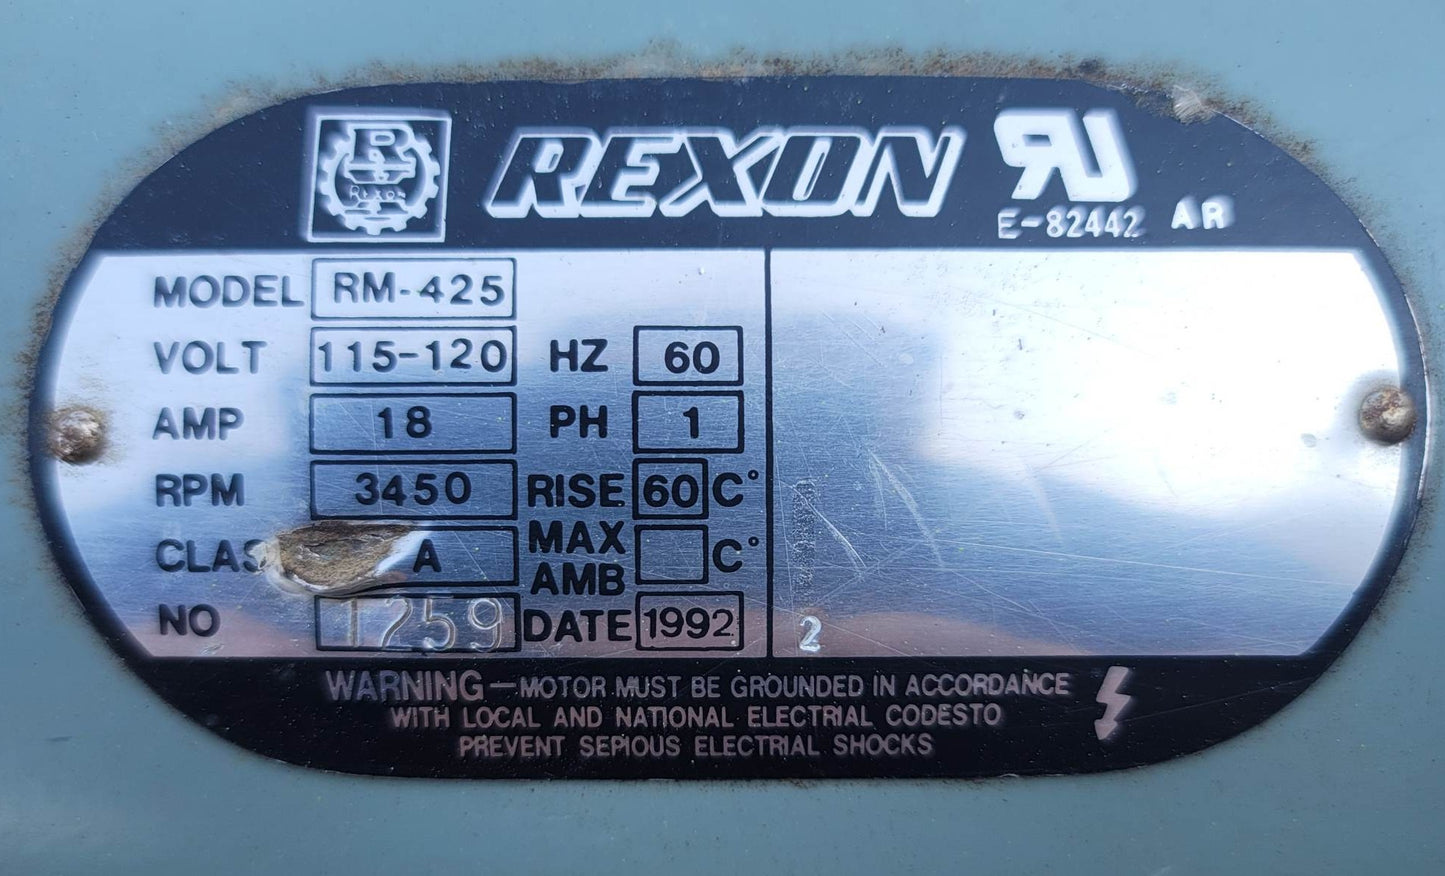 Rexon RM-425 2Hp Electric Motor 110/220 Volt